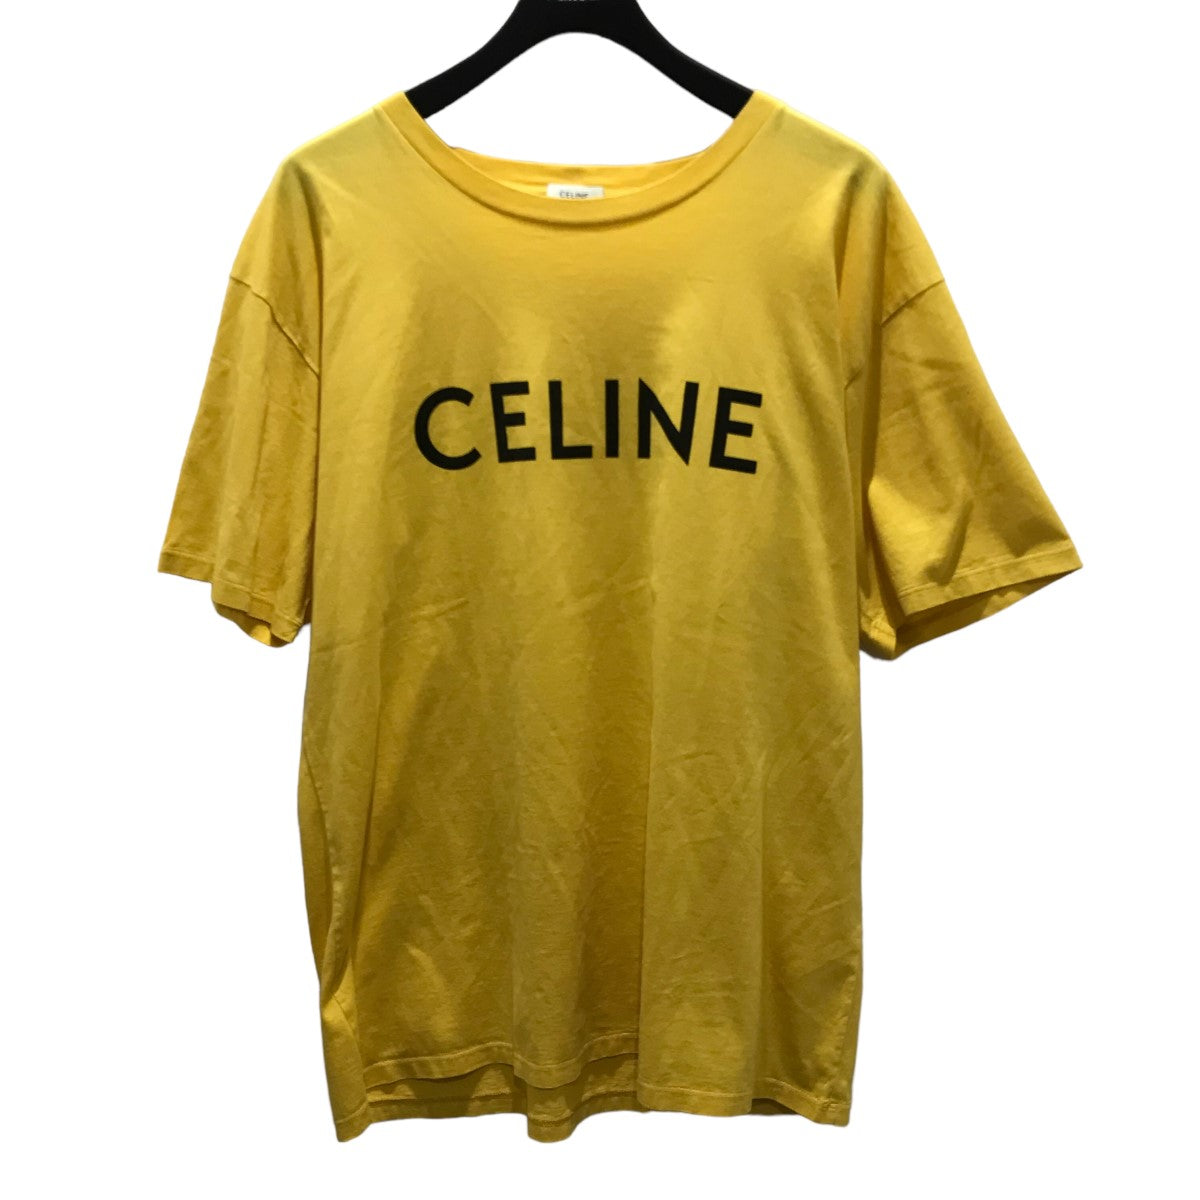 CELINE(セリーヌ) ロゴプリントTシャツ 2X681671Q イエロー 